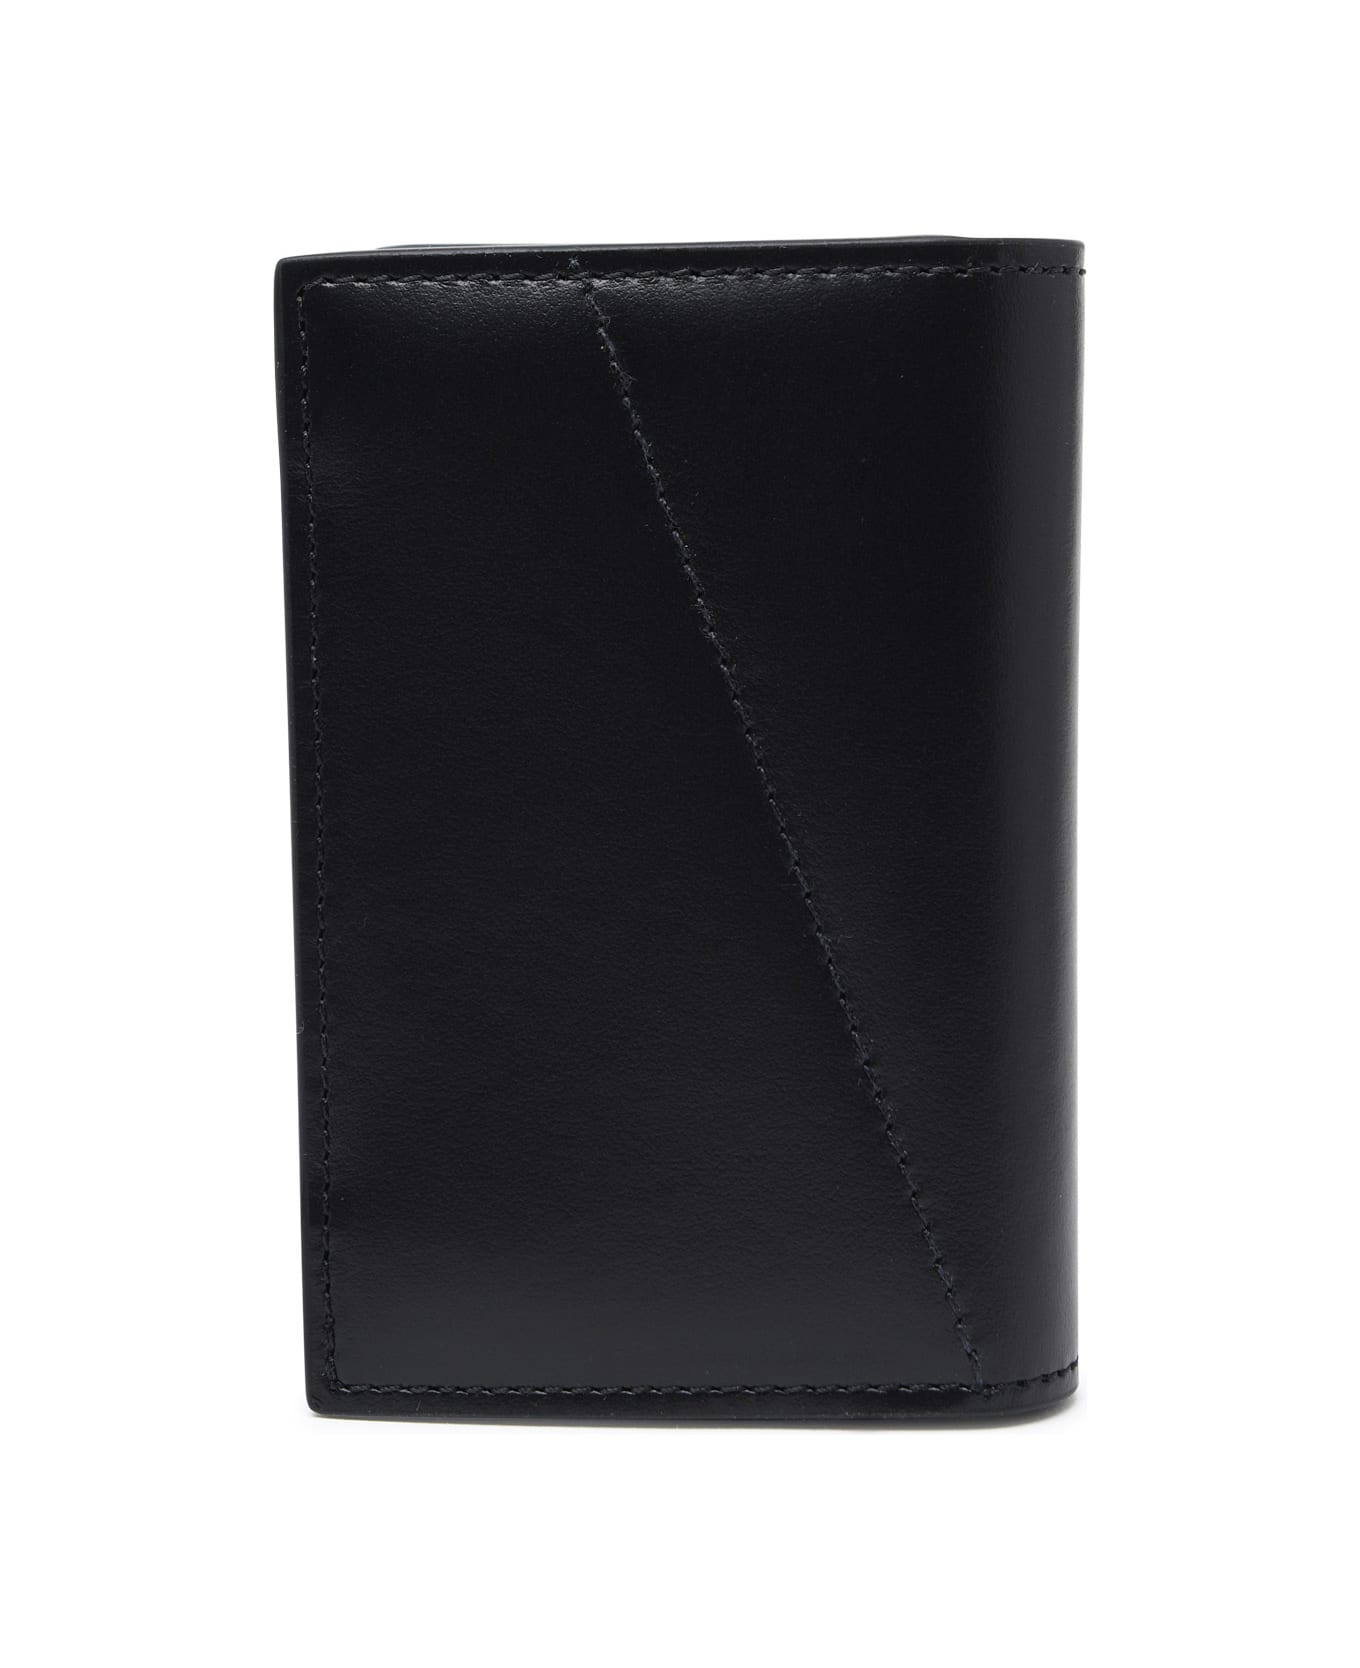 Ferrari Black Leather Wallet - Black